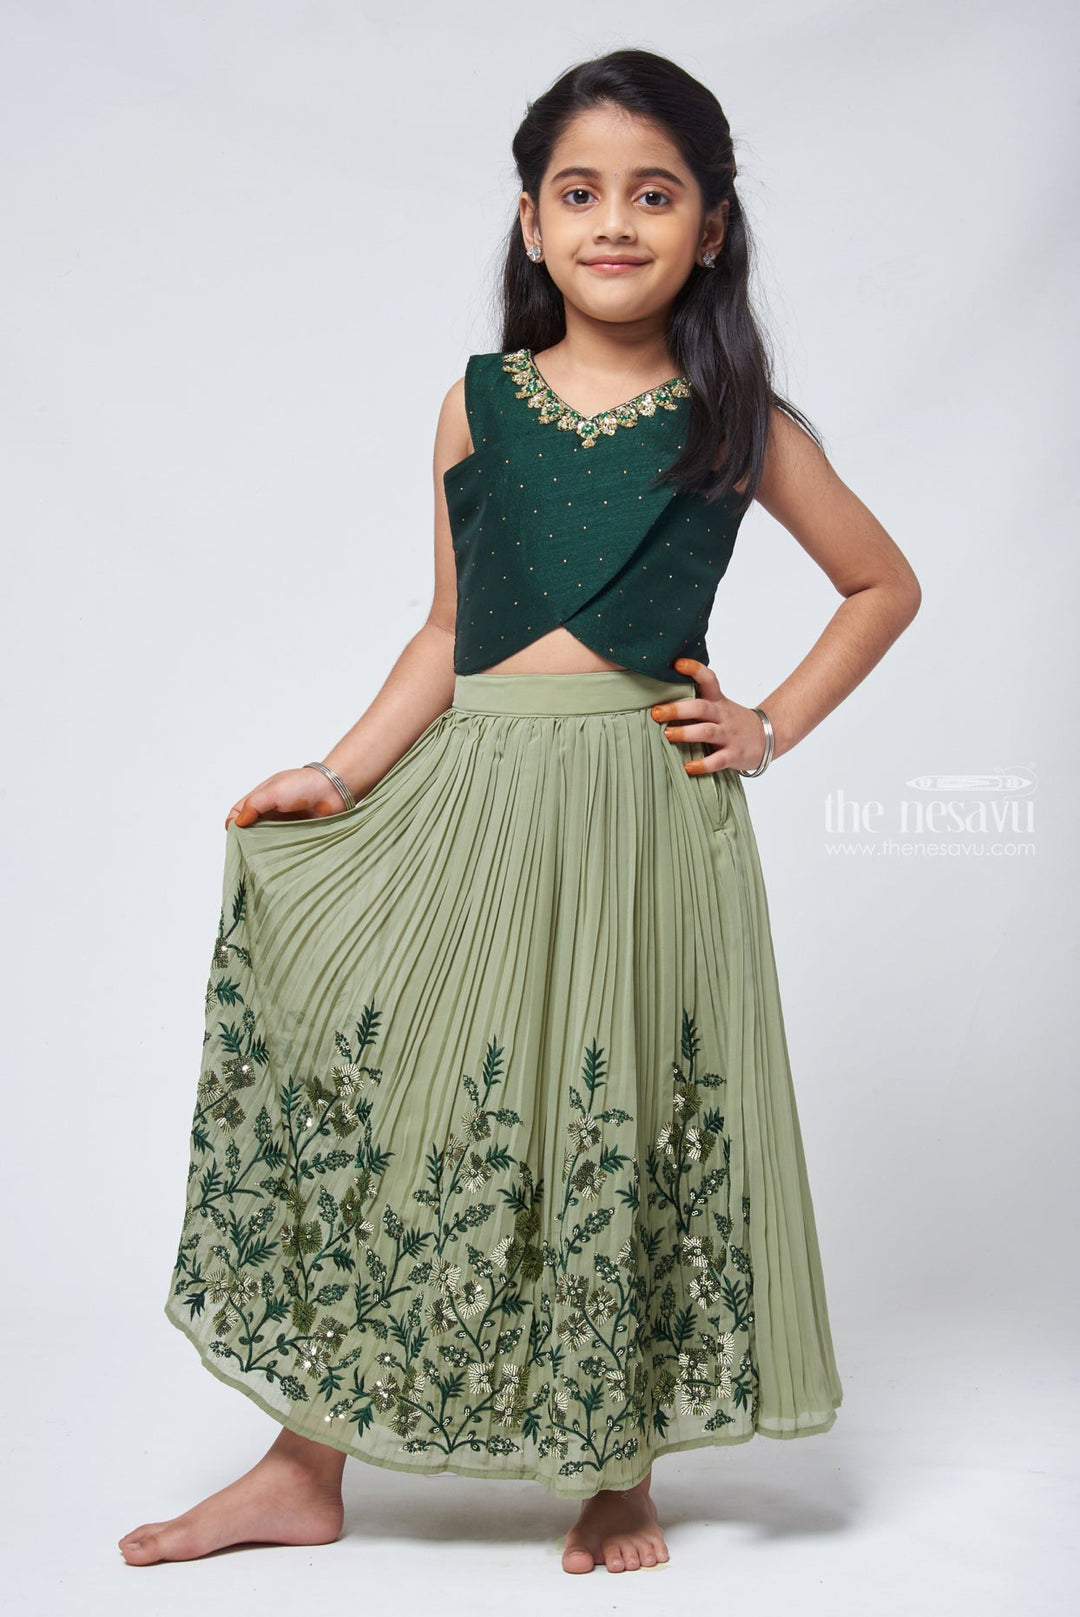 The Nesavu Lehenga & Ghagra Emerald Elegance Floral Embrace in Embroidered Lehenga with Criss Cross Blouse for Girls Nesavu Designer Lehenga Choli For Girls | Sharara Choli For Kids | The Nesavu